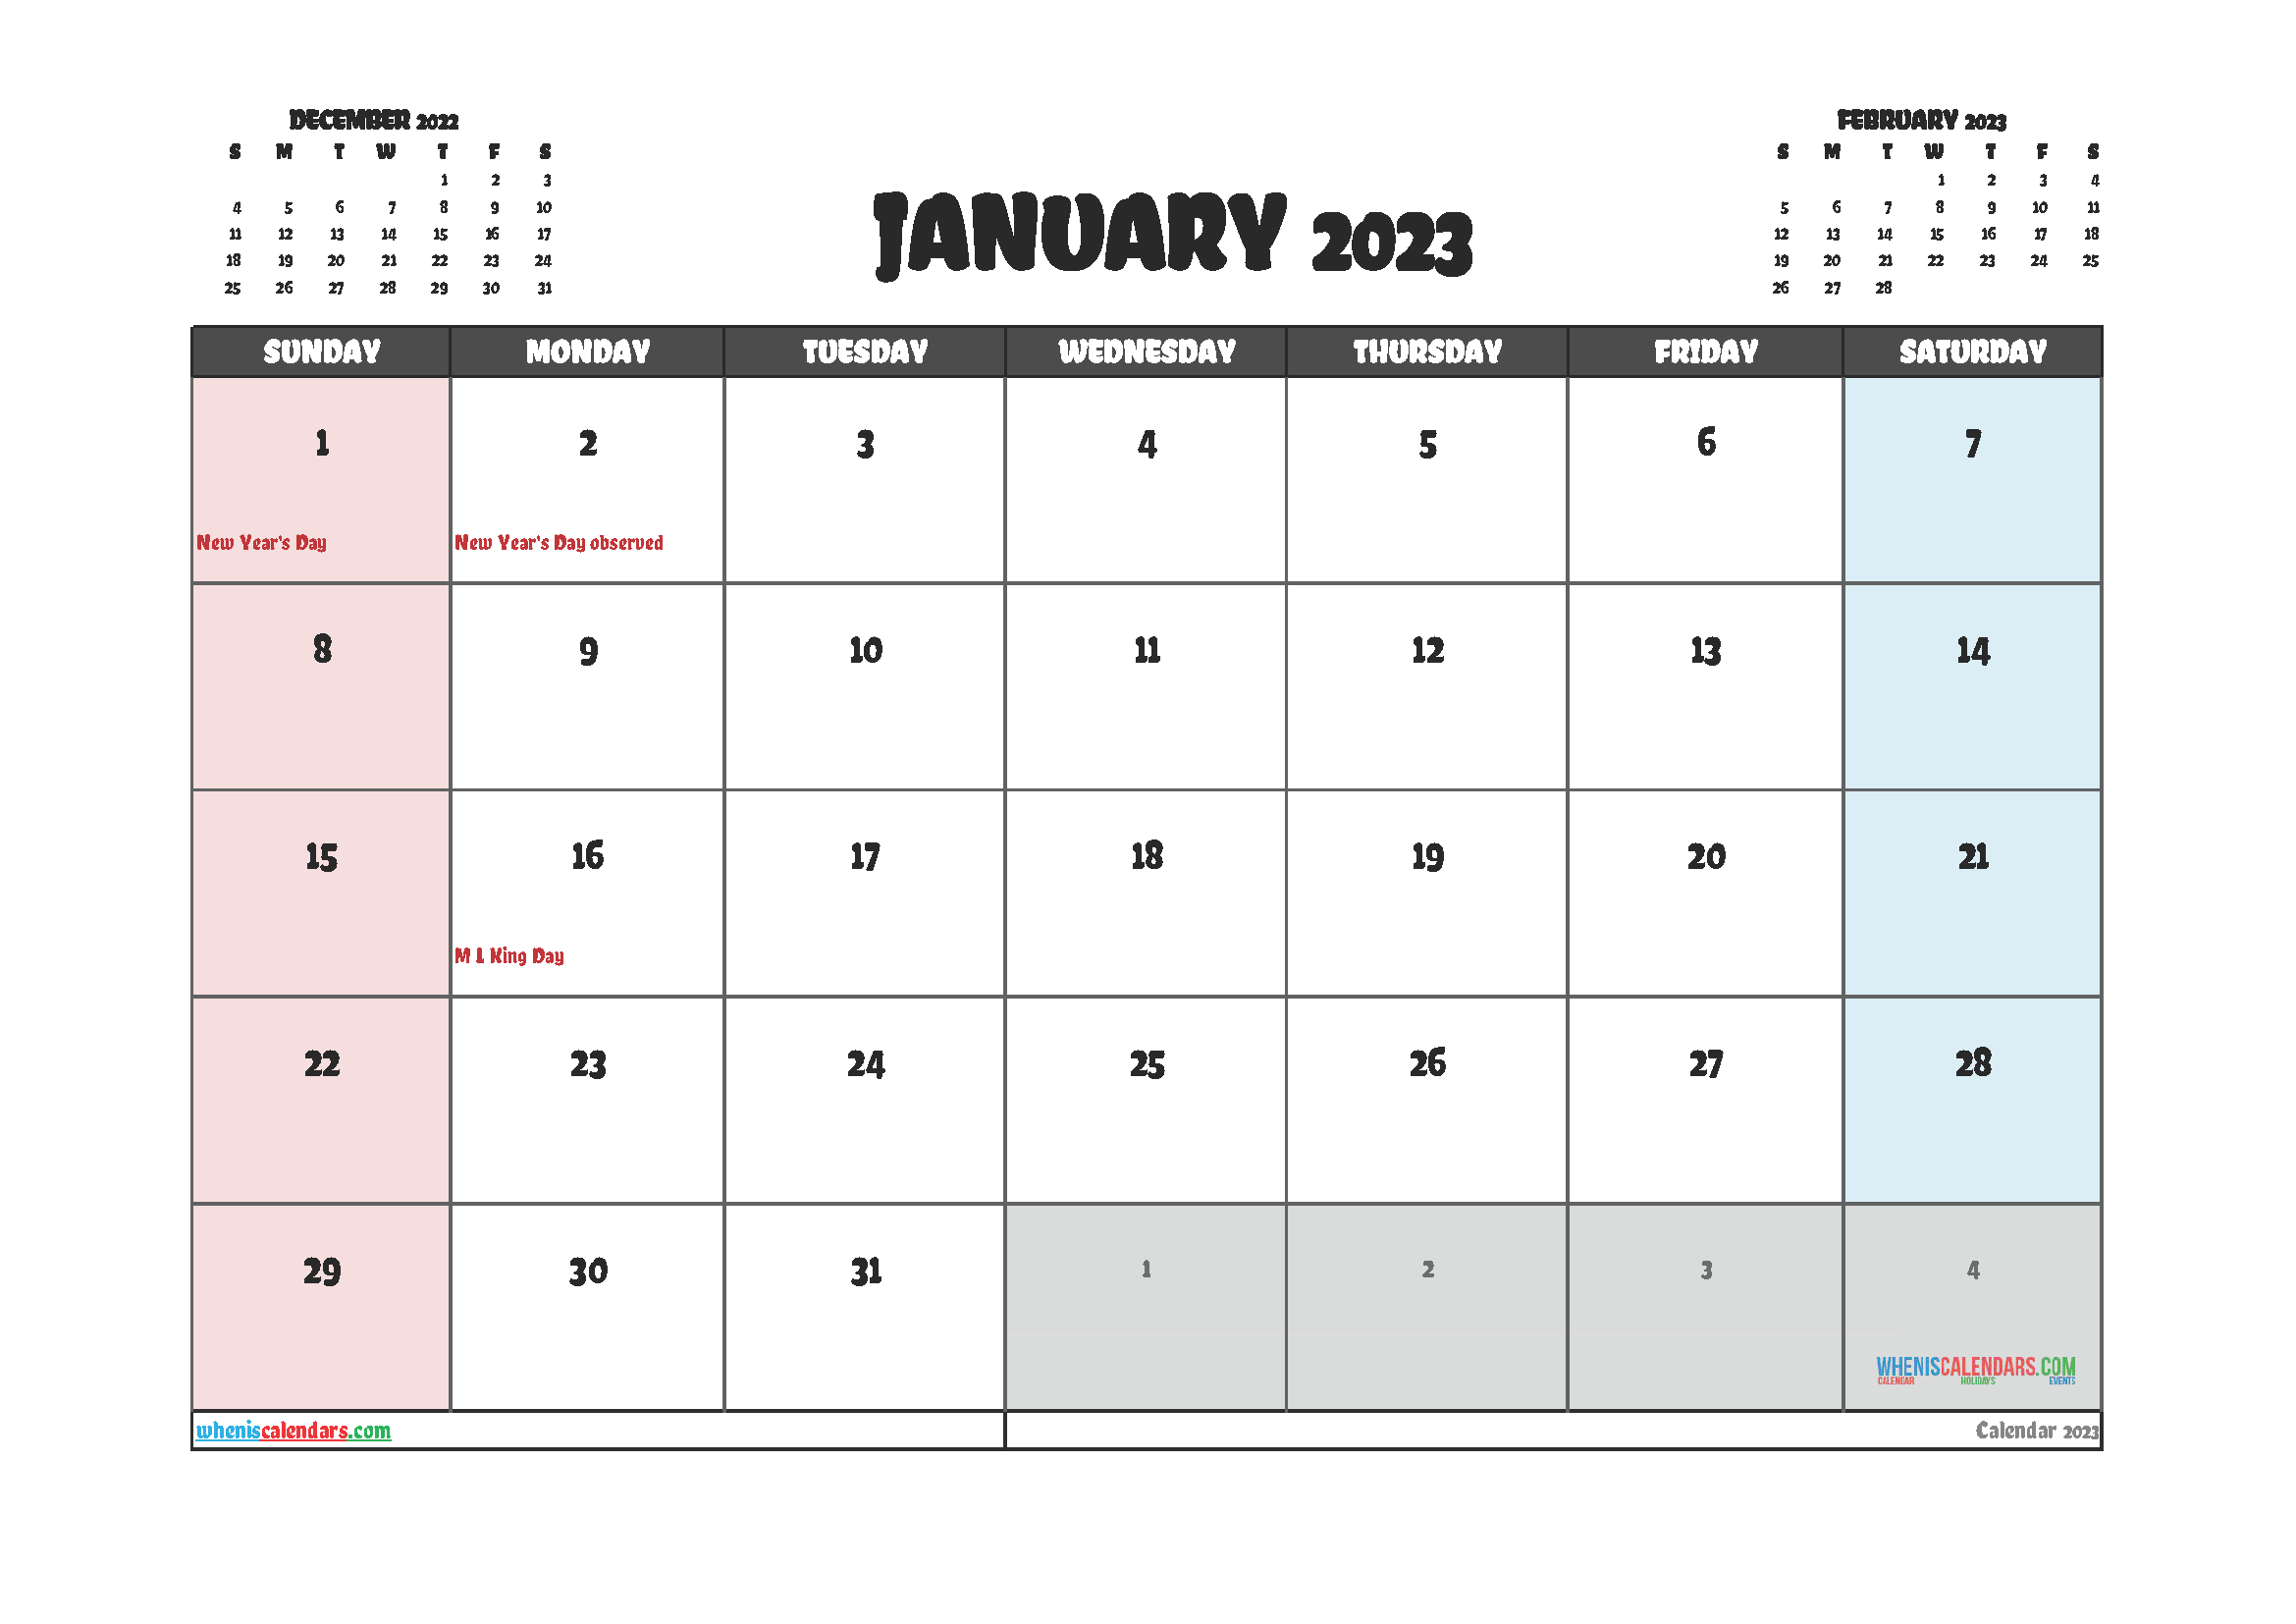 2023-calendar-with-holidays-free-printable-premium-template-27472